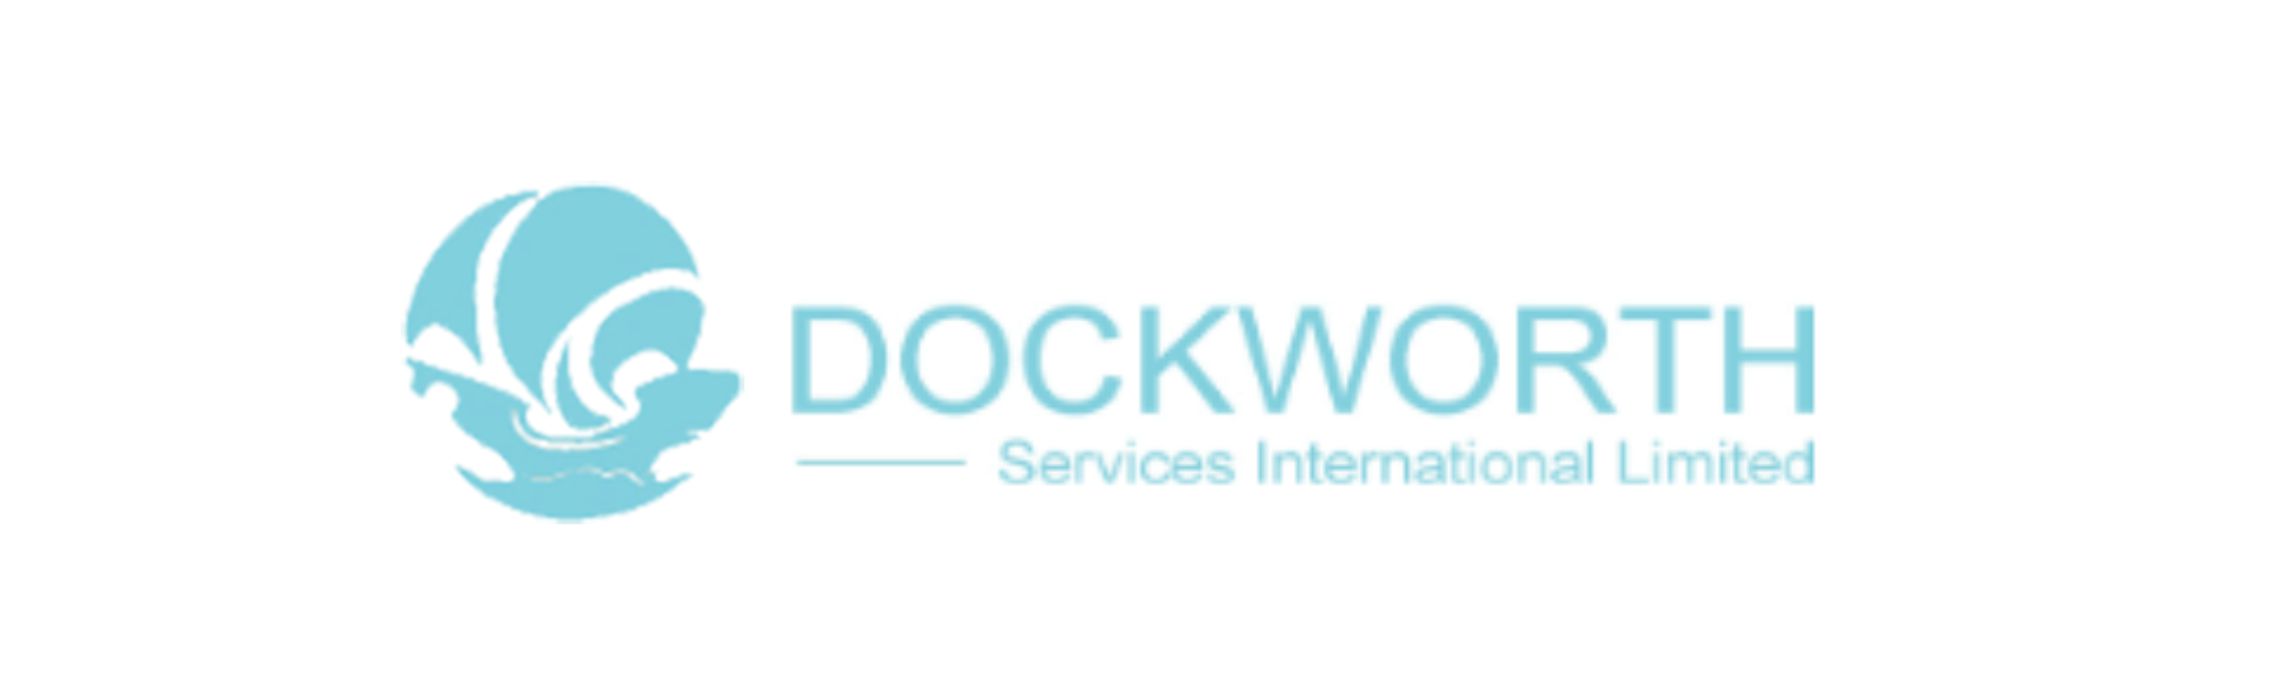 Dock Worth Services International